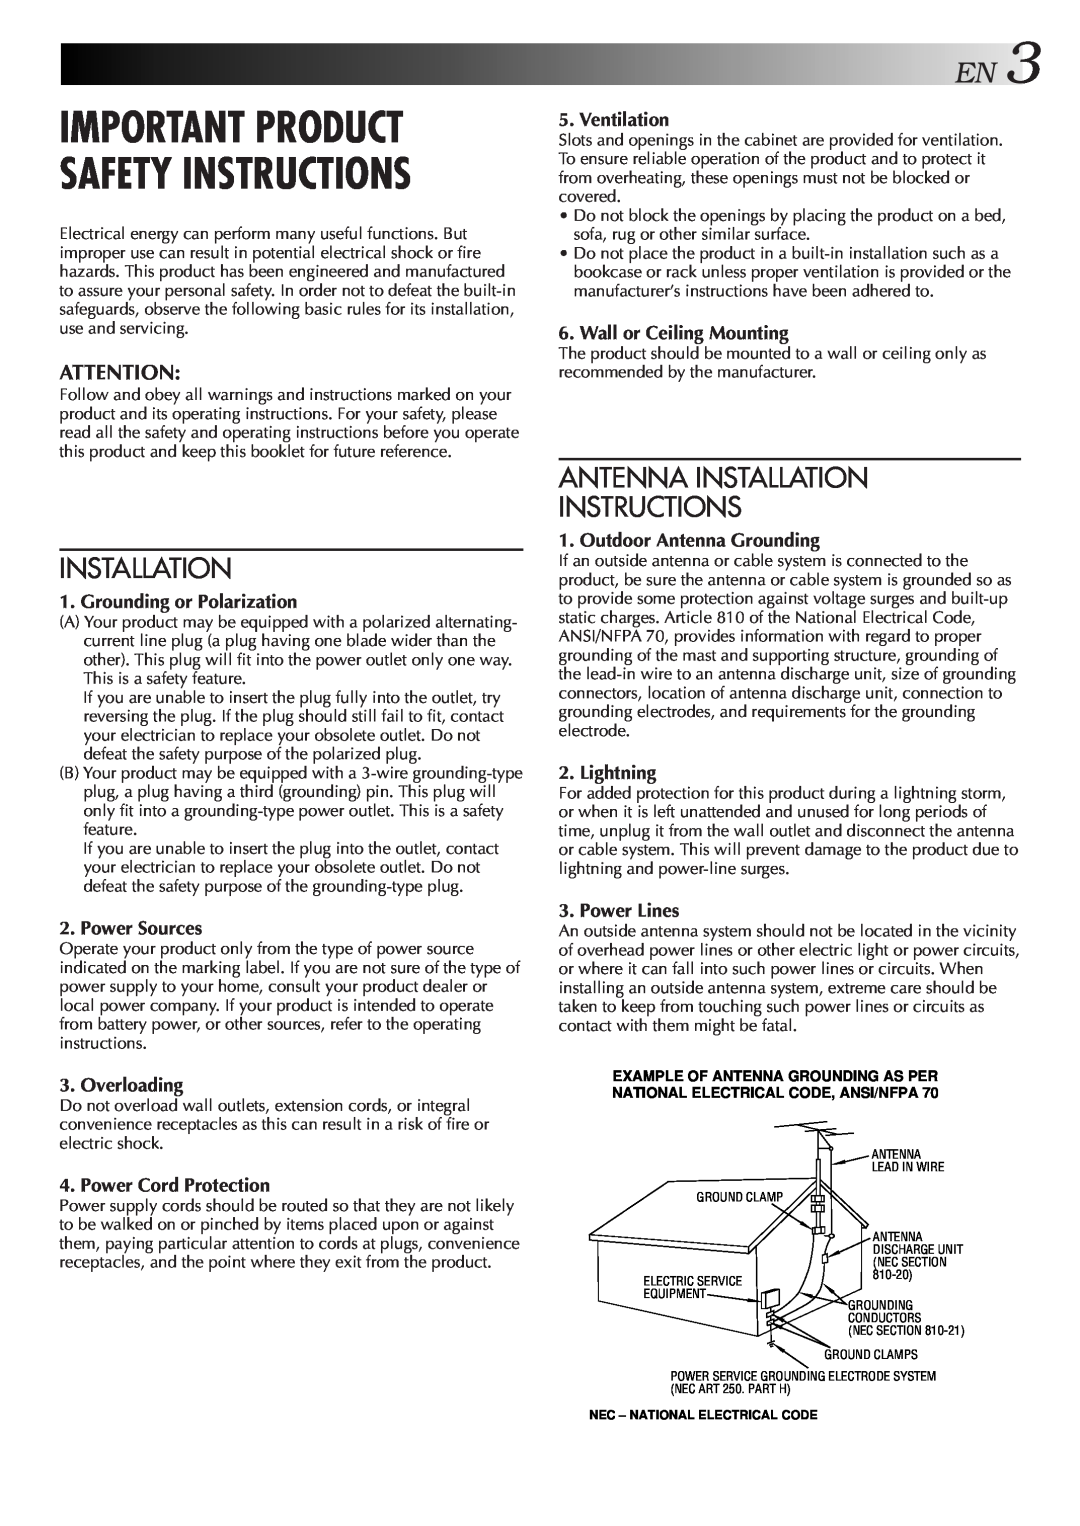 JVC Model HR-DVS1U manual Important Product Safety Instructions, Antenna Installation Instructions 